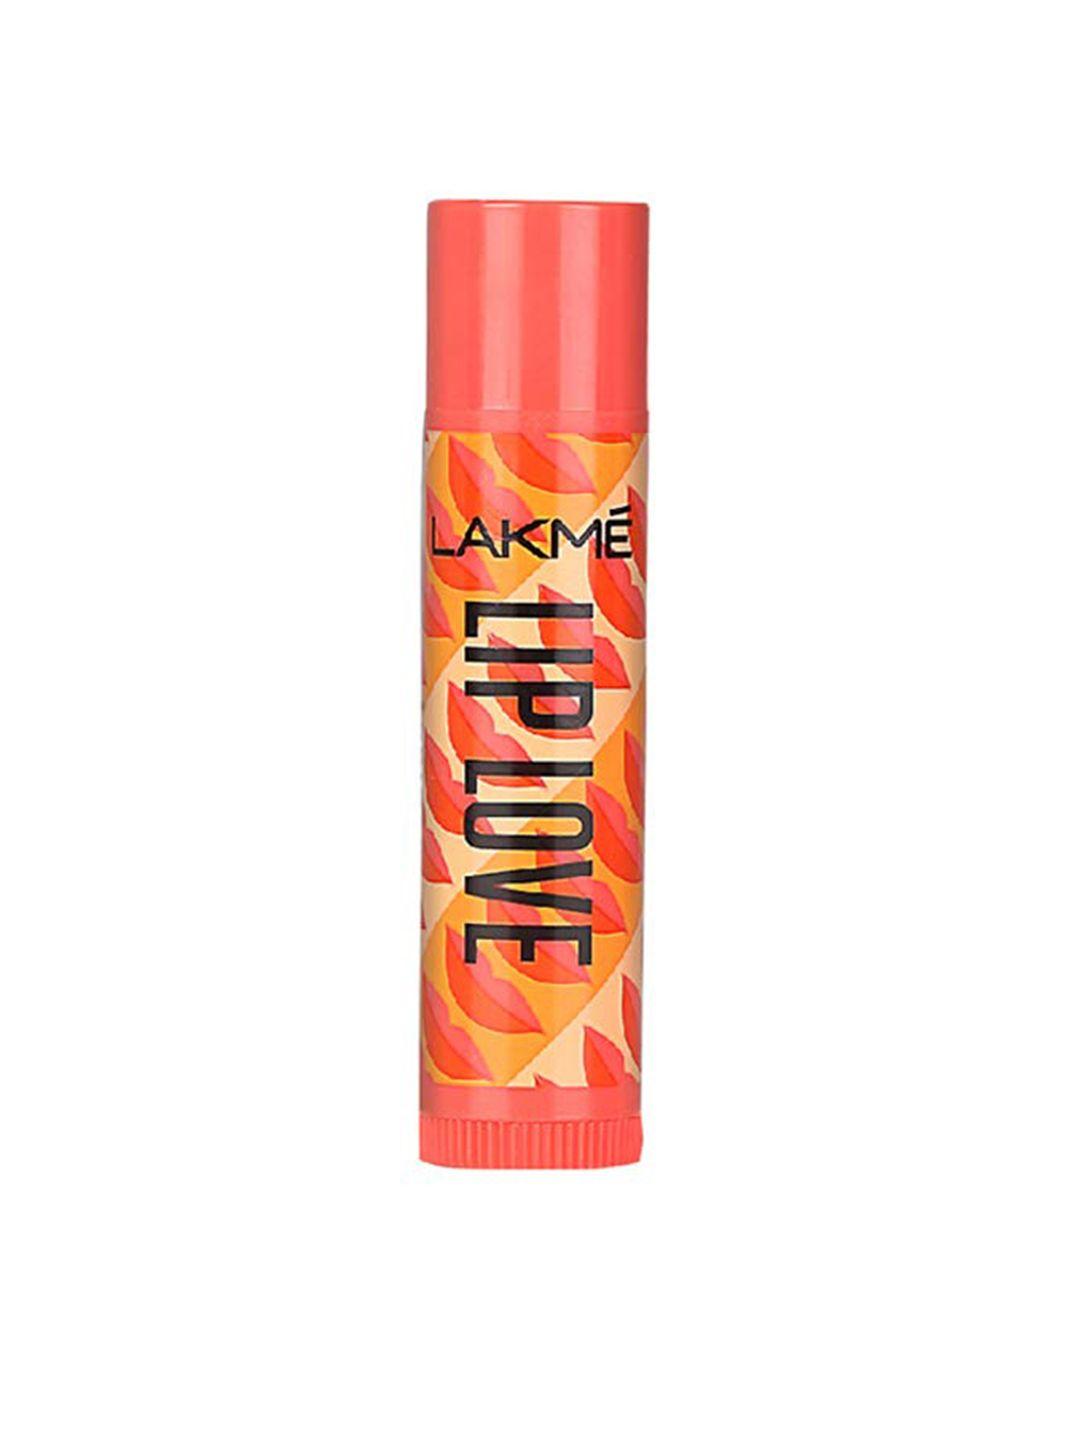 lakme lip love chapstick spf 15 - mango